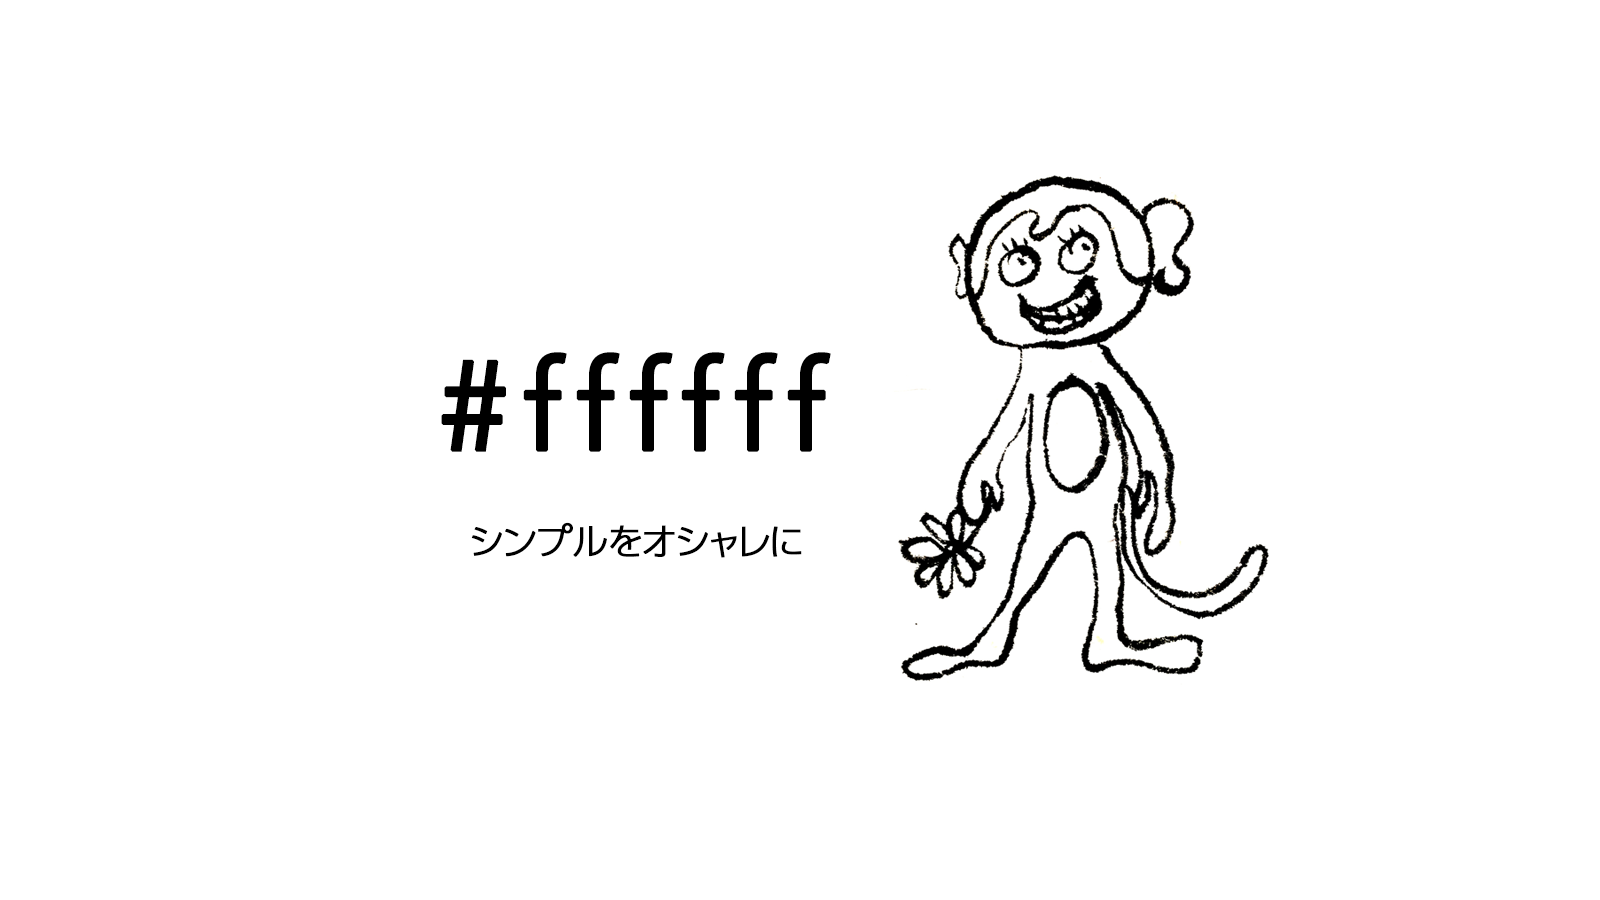 SUZURIと連携してオリジナルTシャツやグッズを購入できる通販サイト#ffffffを制作しました